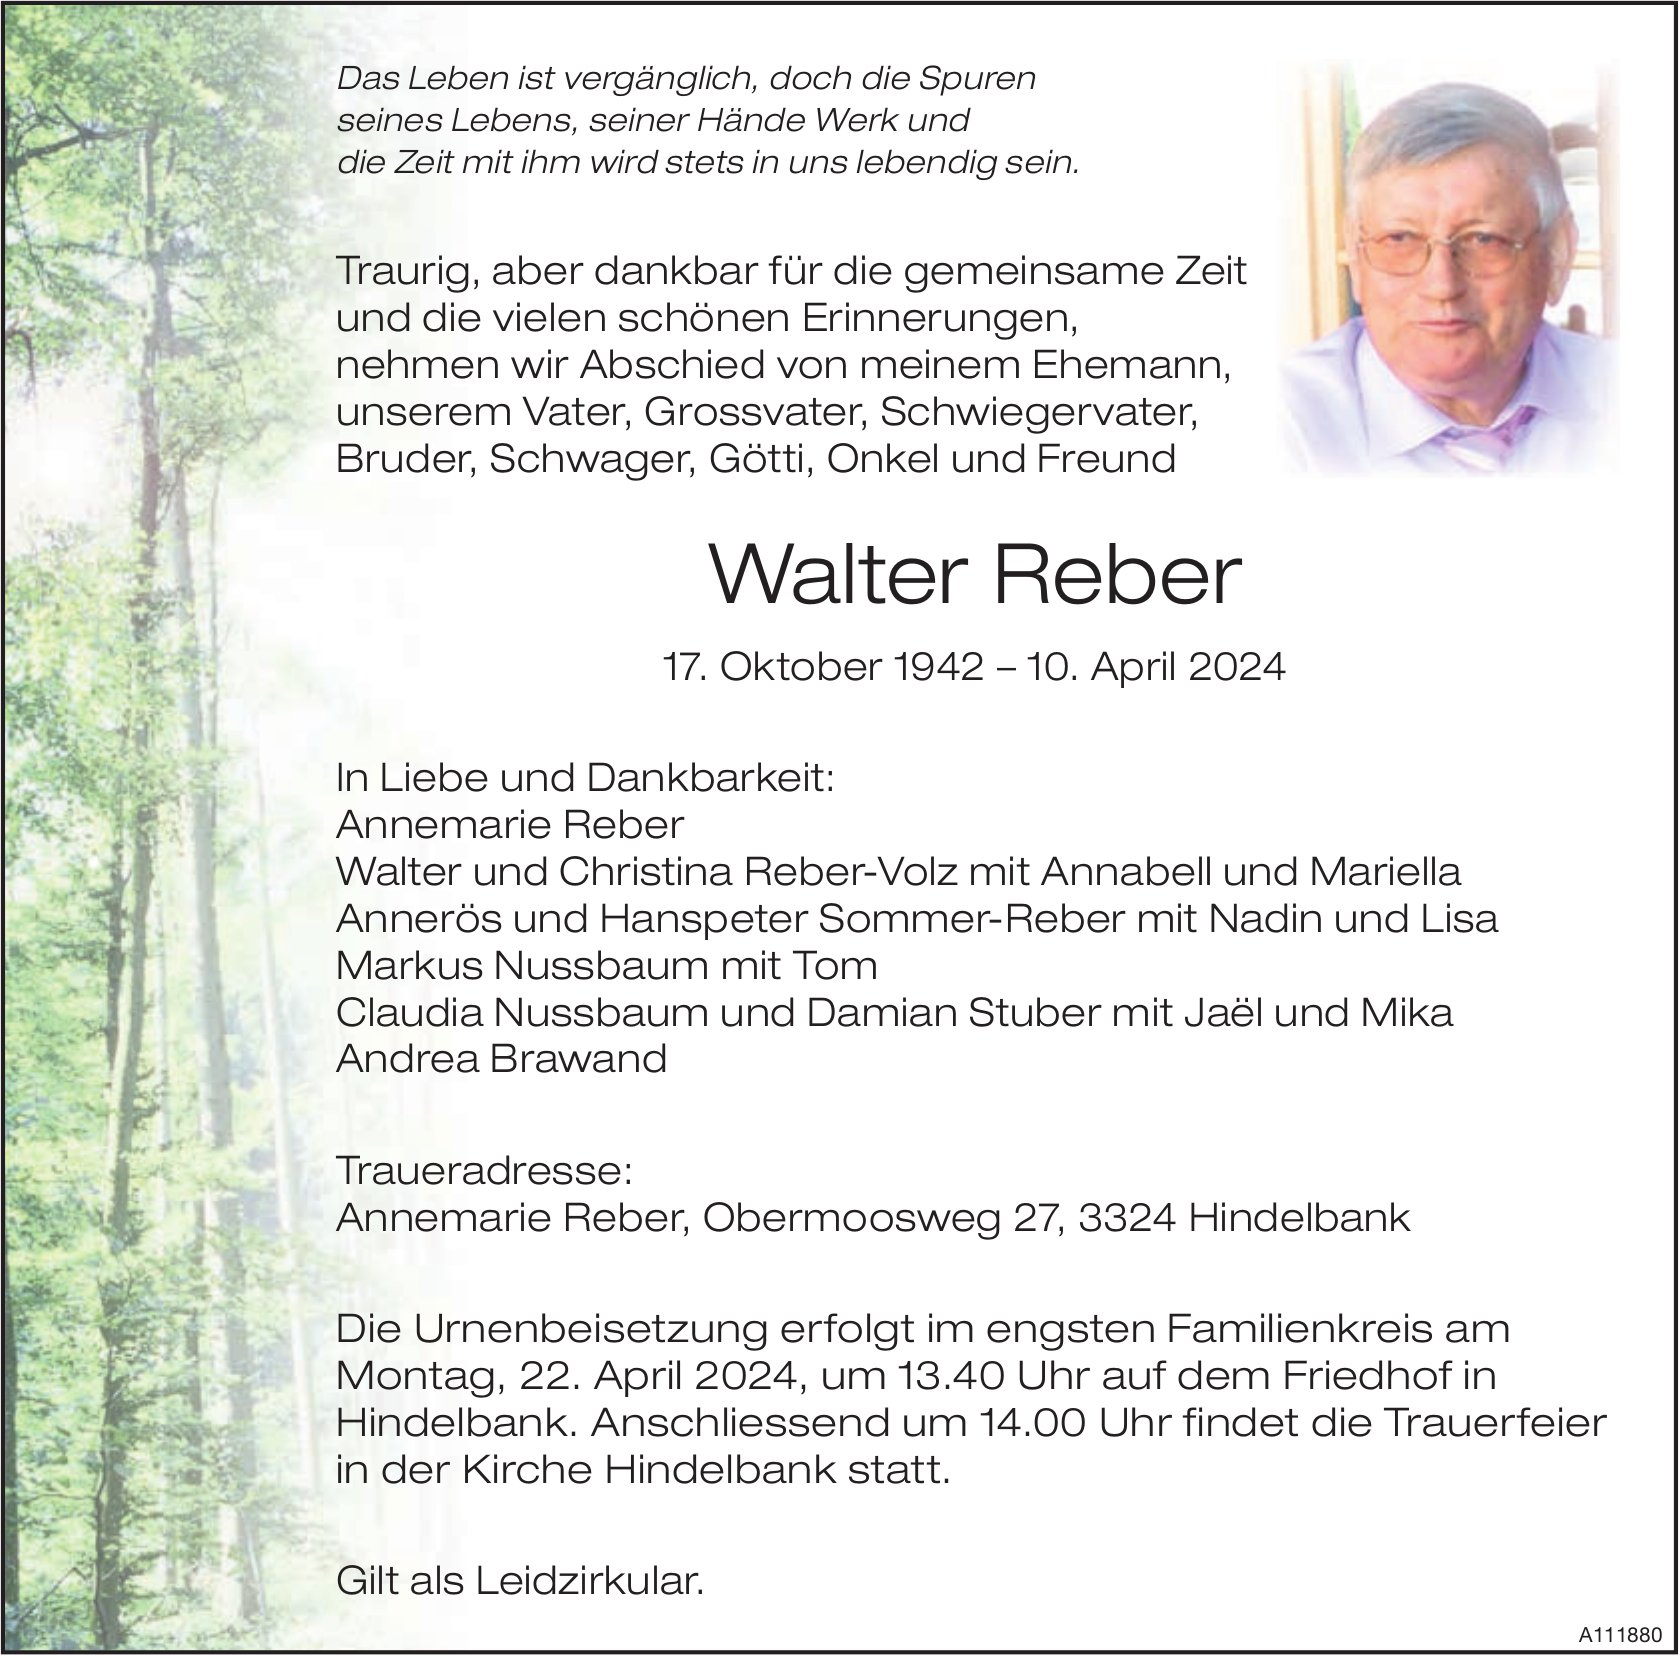 Walter Reber, April 2024 / TA